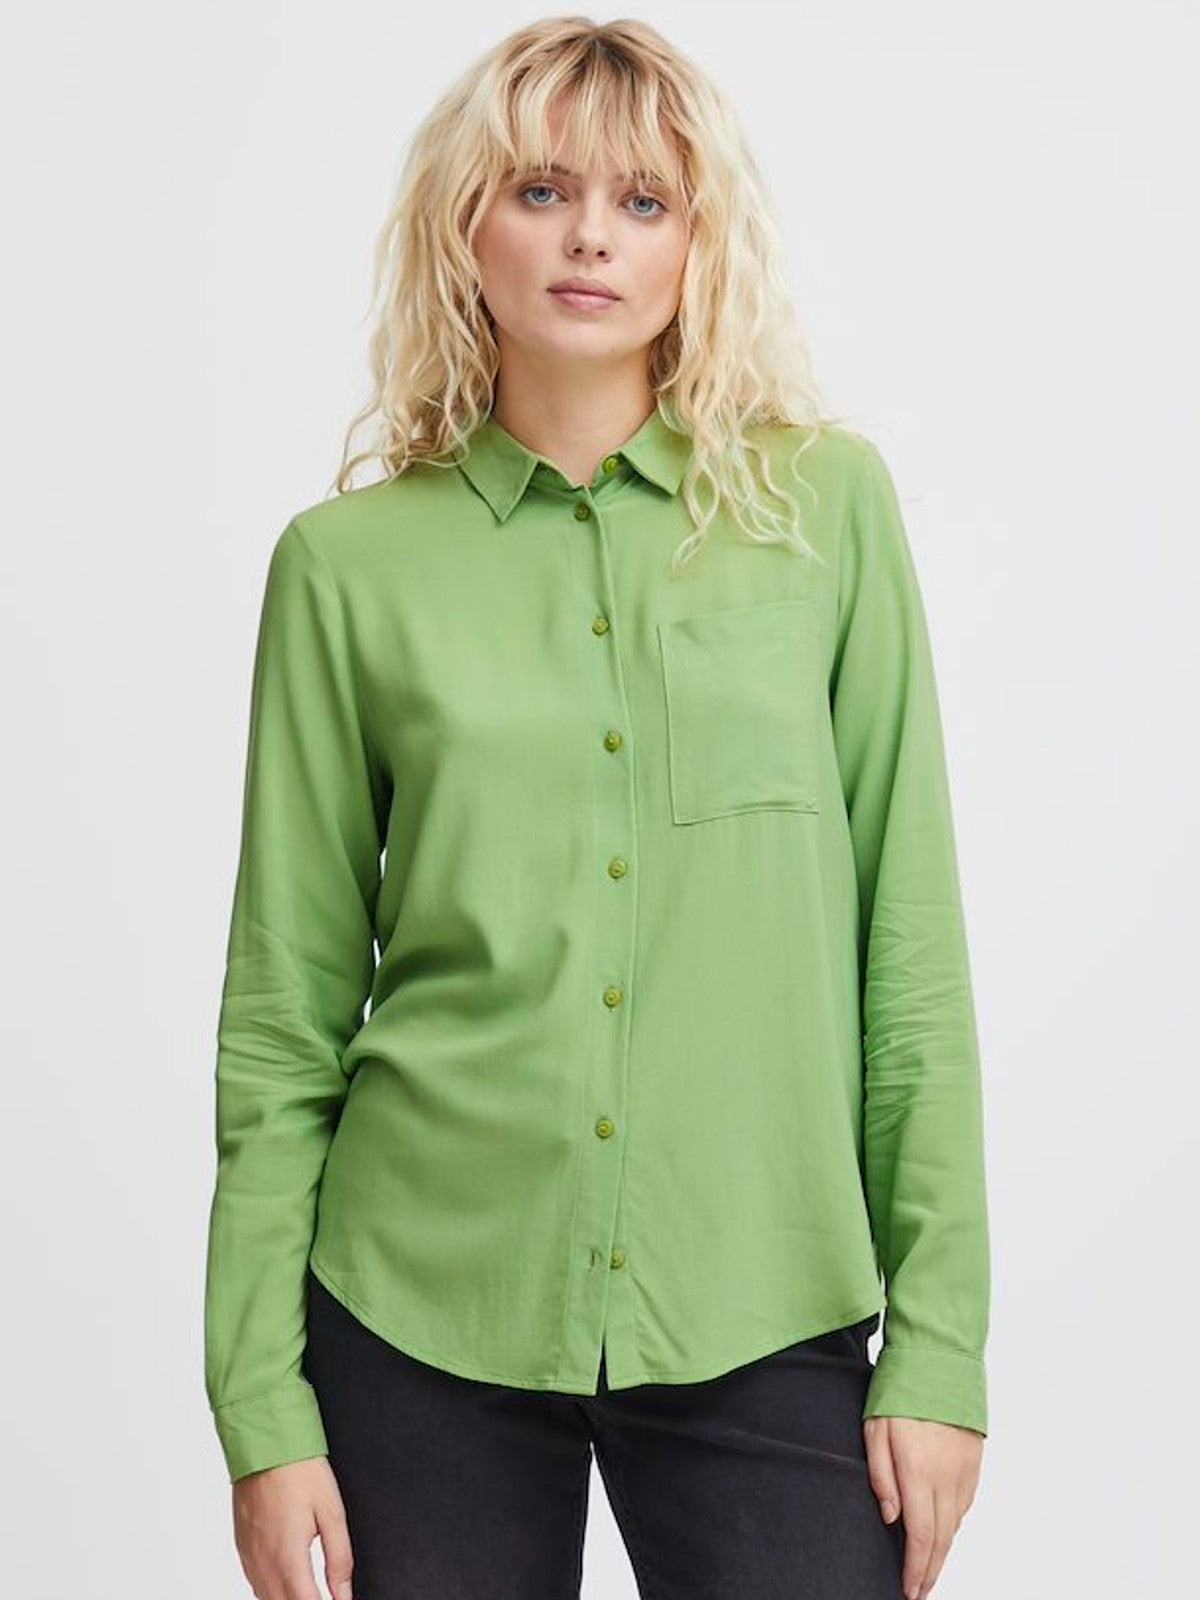 Main Green Shirt